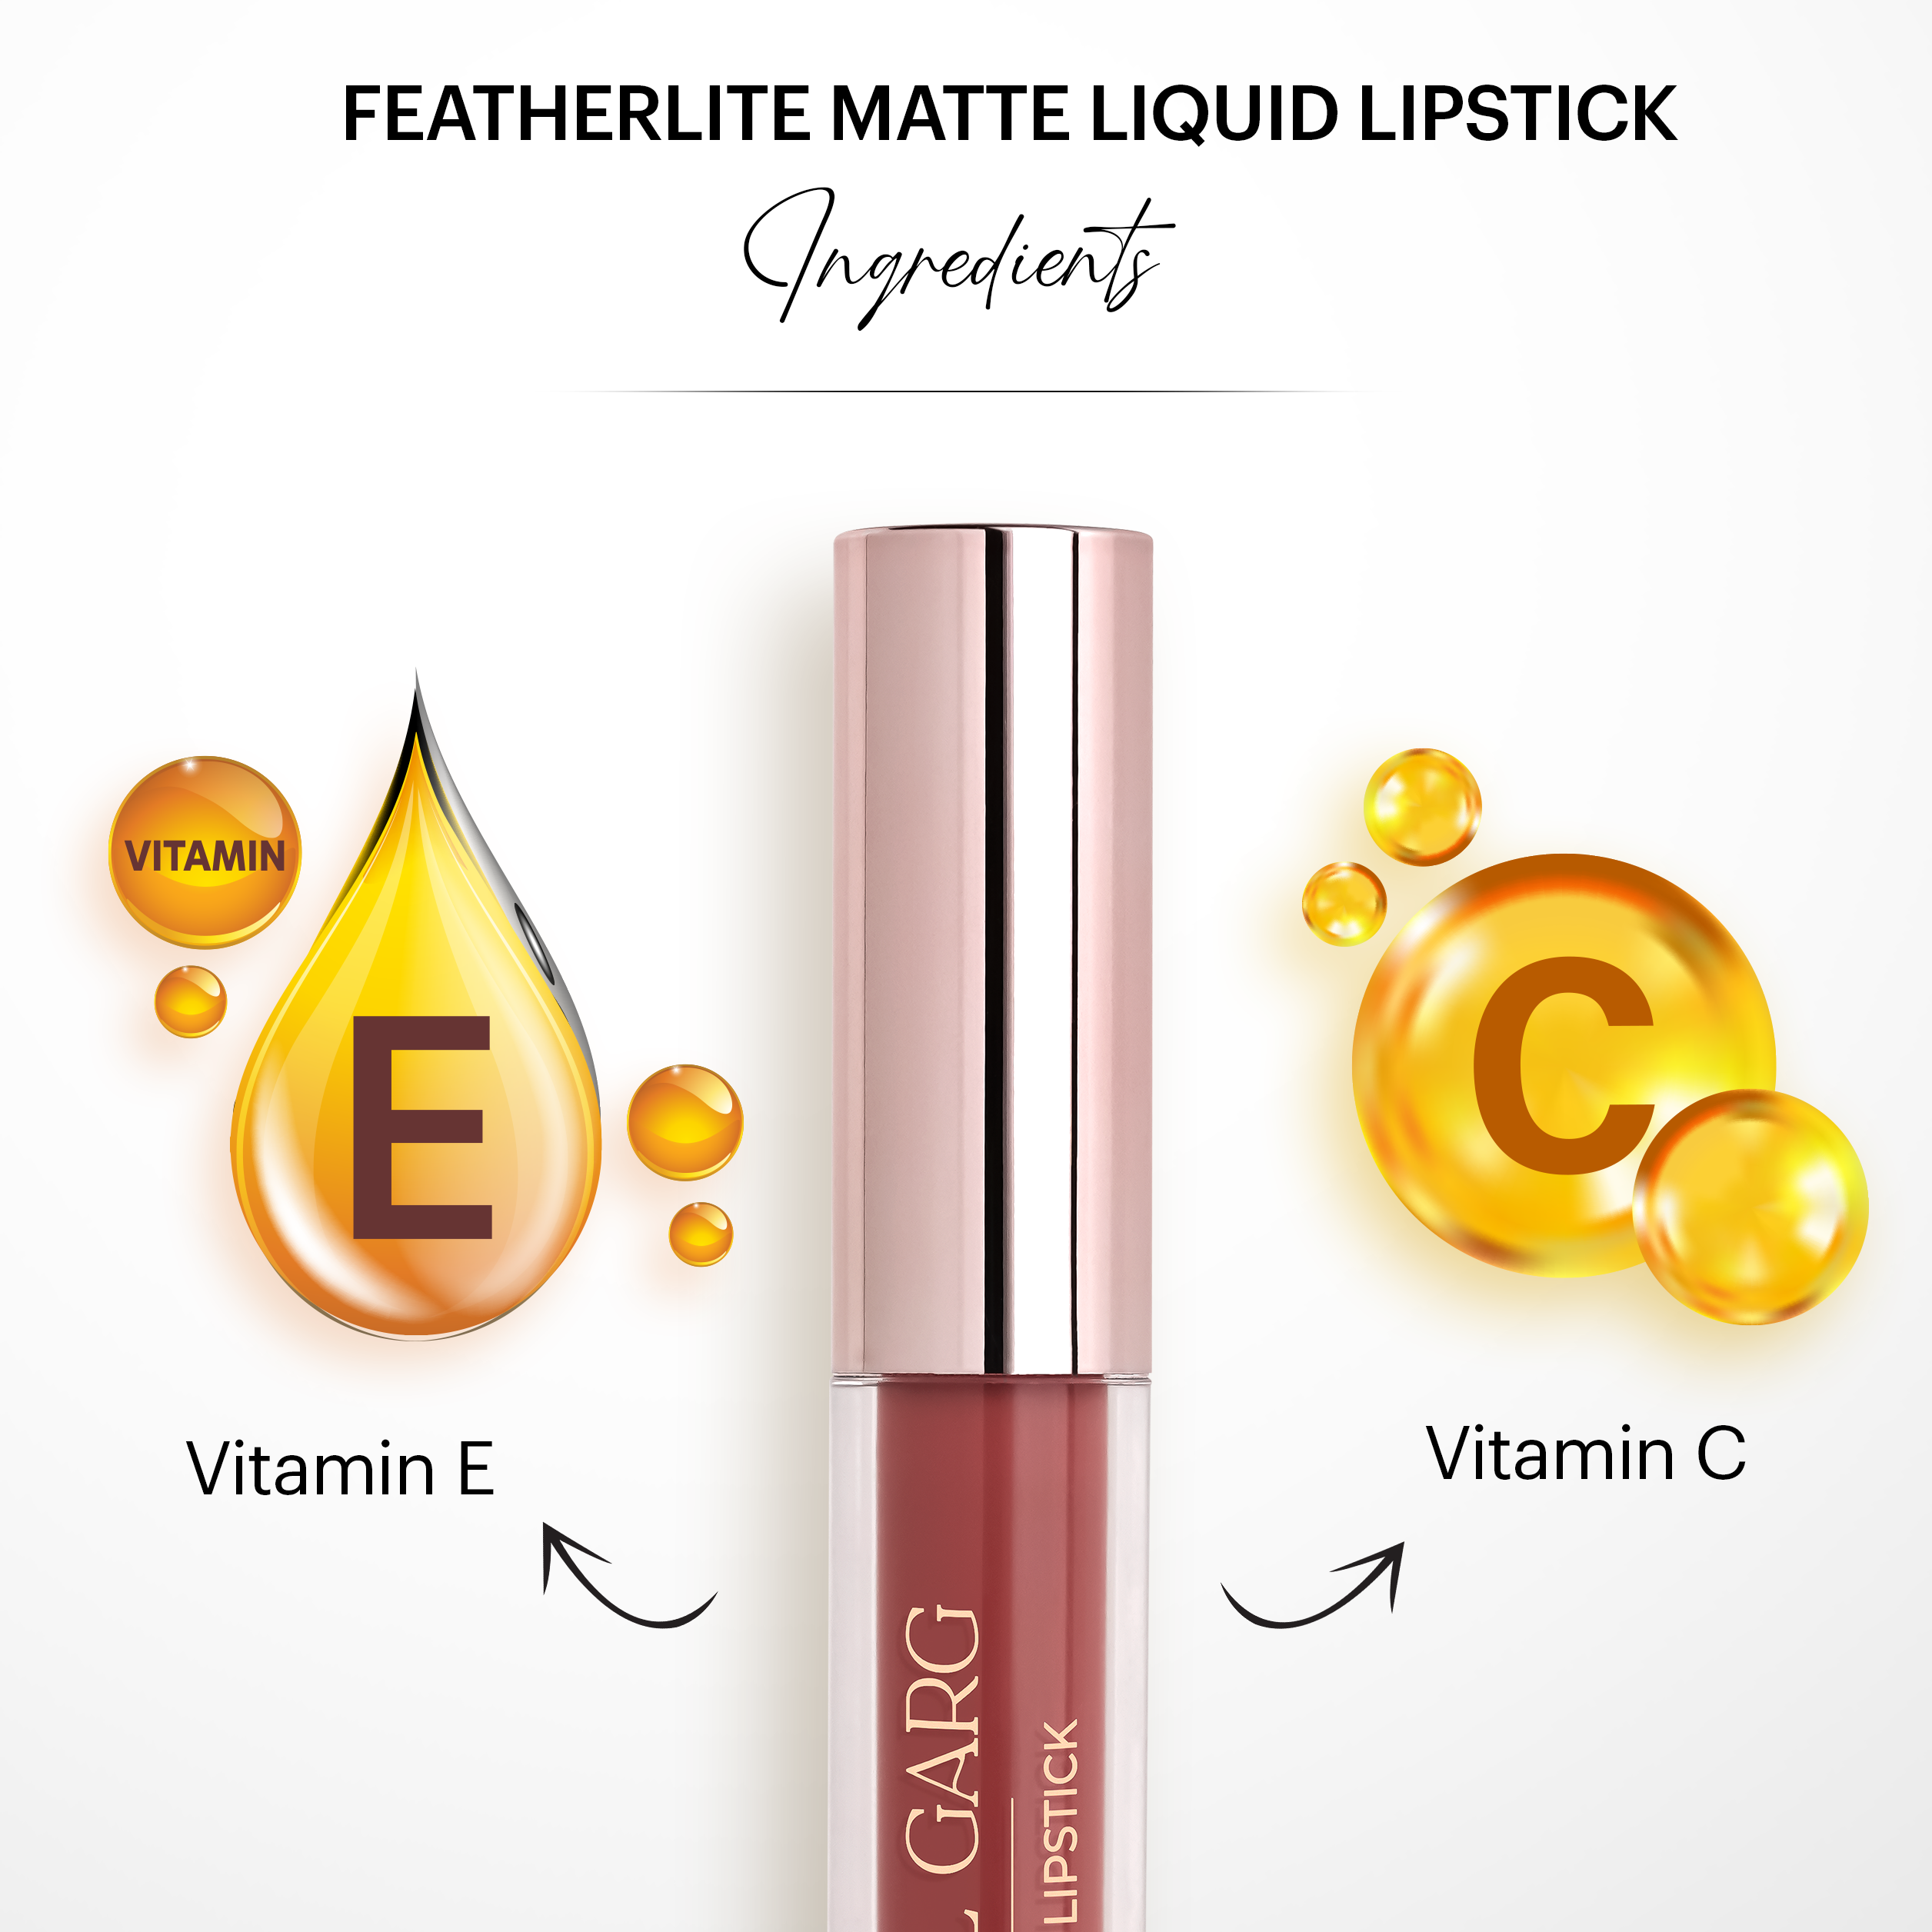 Featherlite Matte Liquid Lipstick: Adore 52